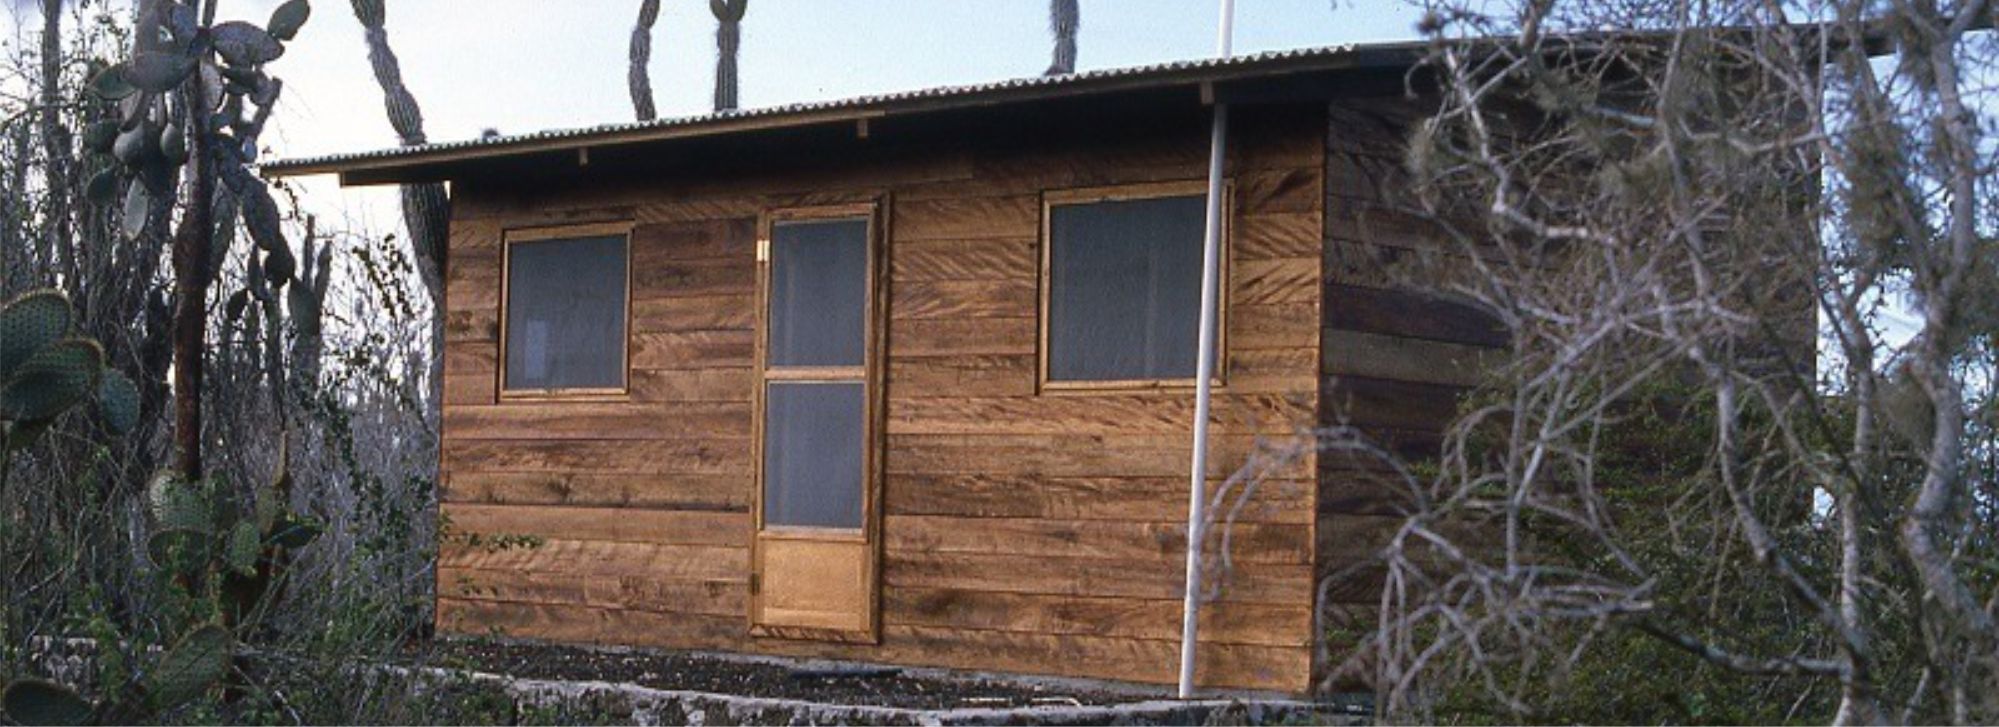 The seismograph's cabin